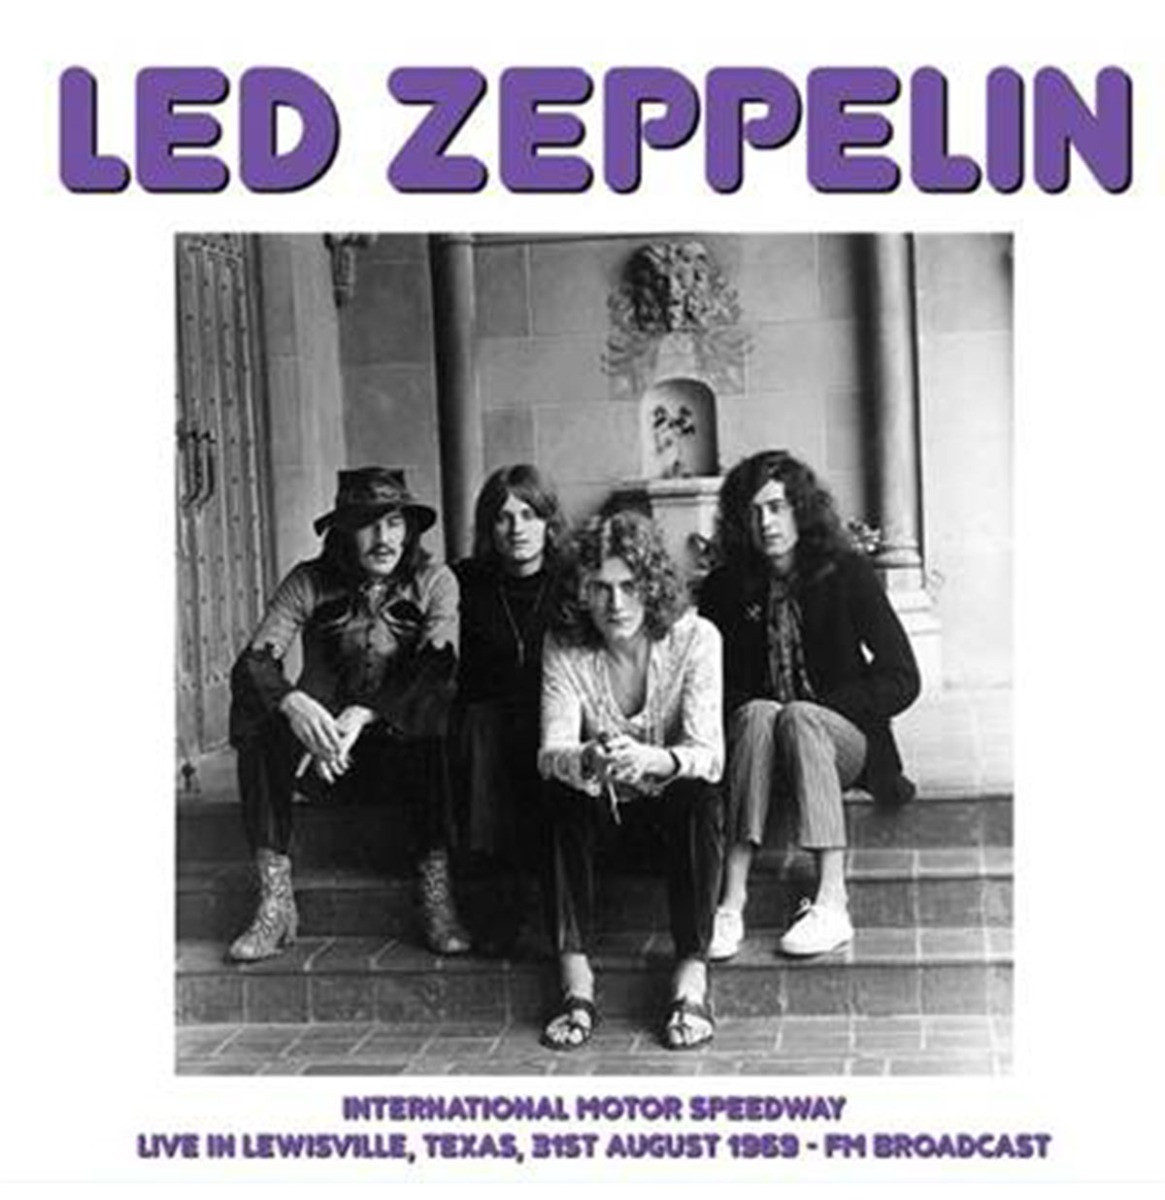 Led Zeppelin - International Motor Speedway, Live In Lewisville, Texas, 31st August 1969 FM Broadcast LP